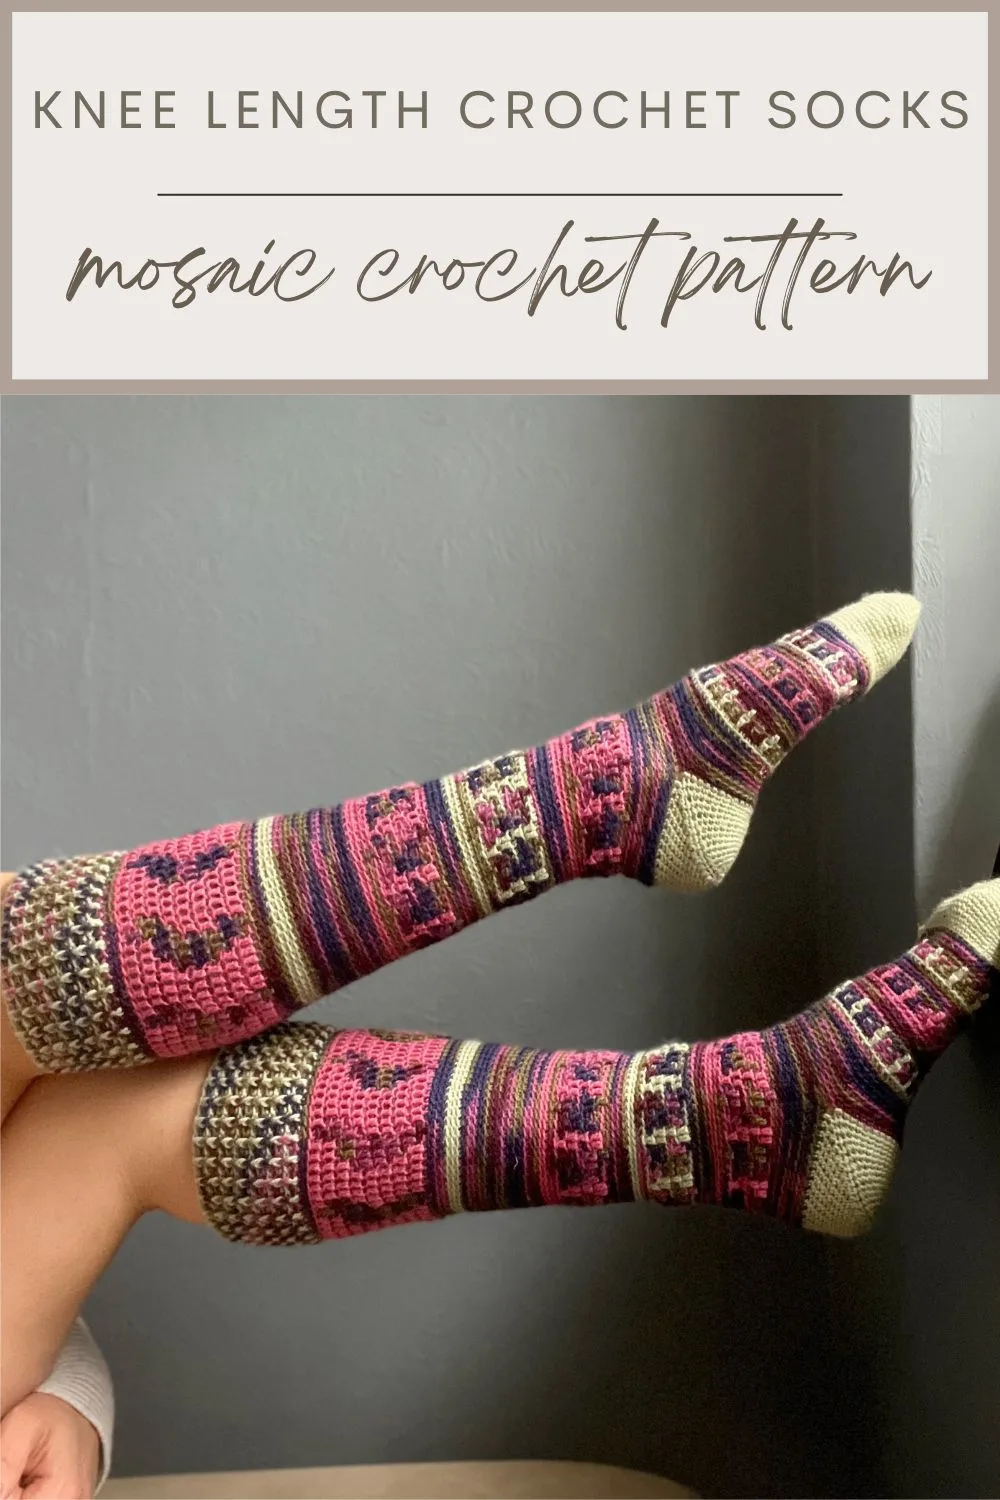 Images of colorful crochet long socks.